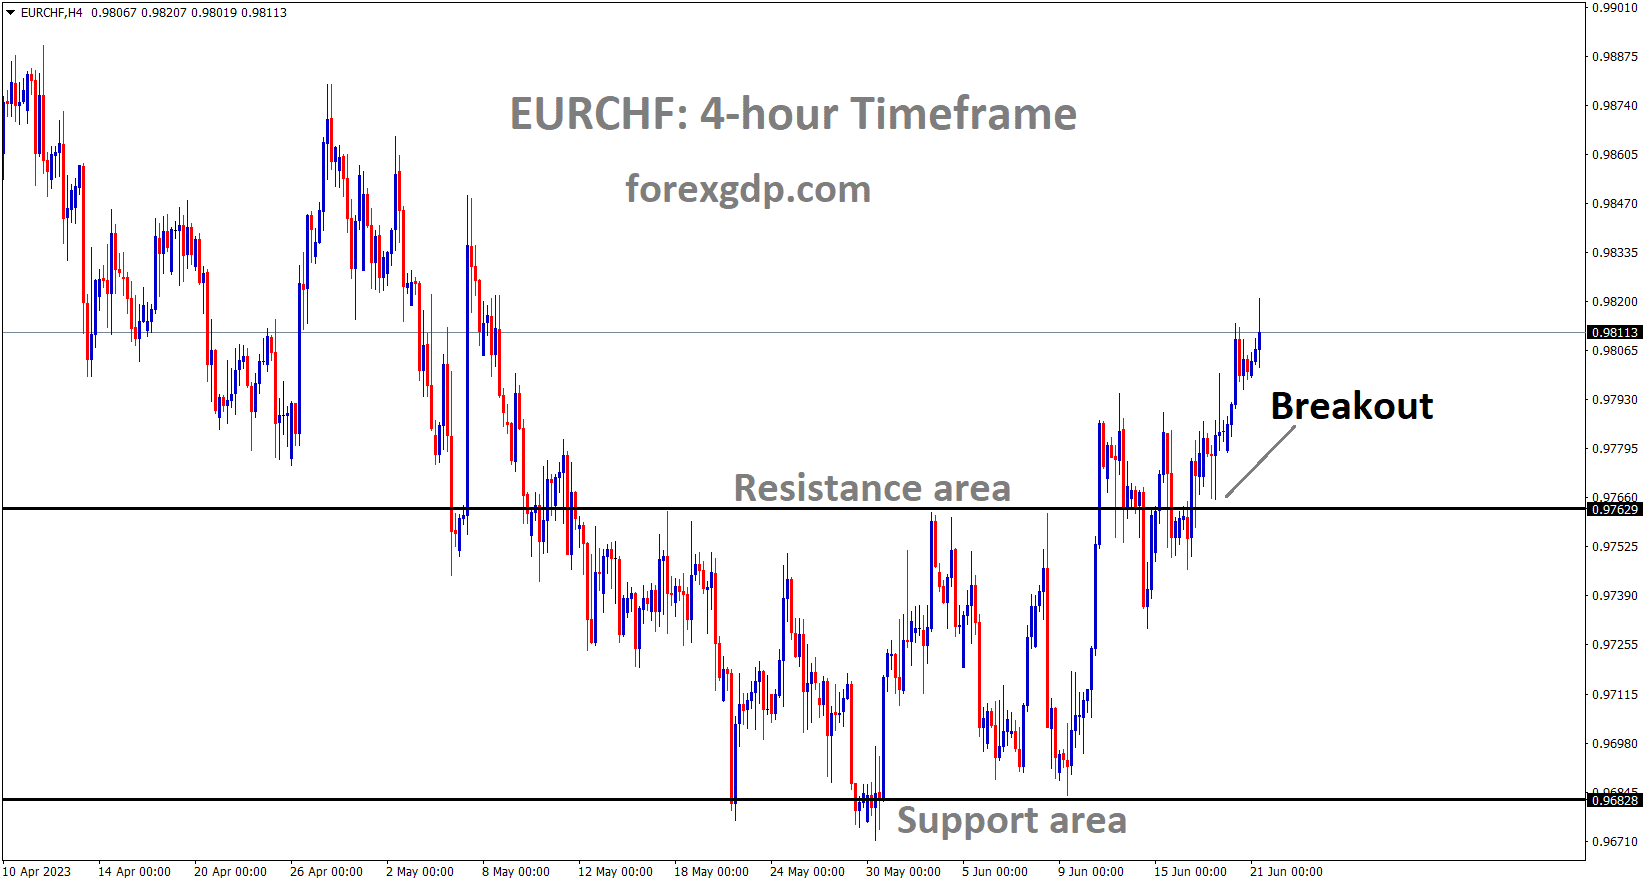 EURCHF has broken the Box pattern